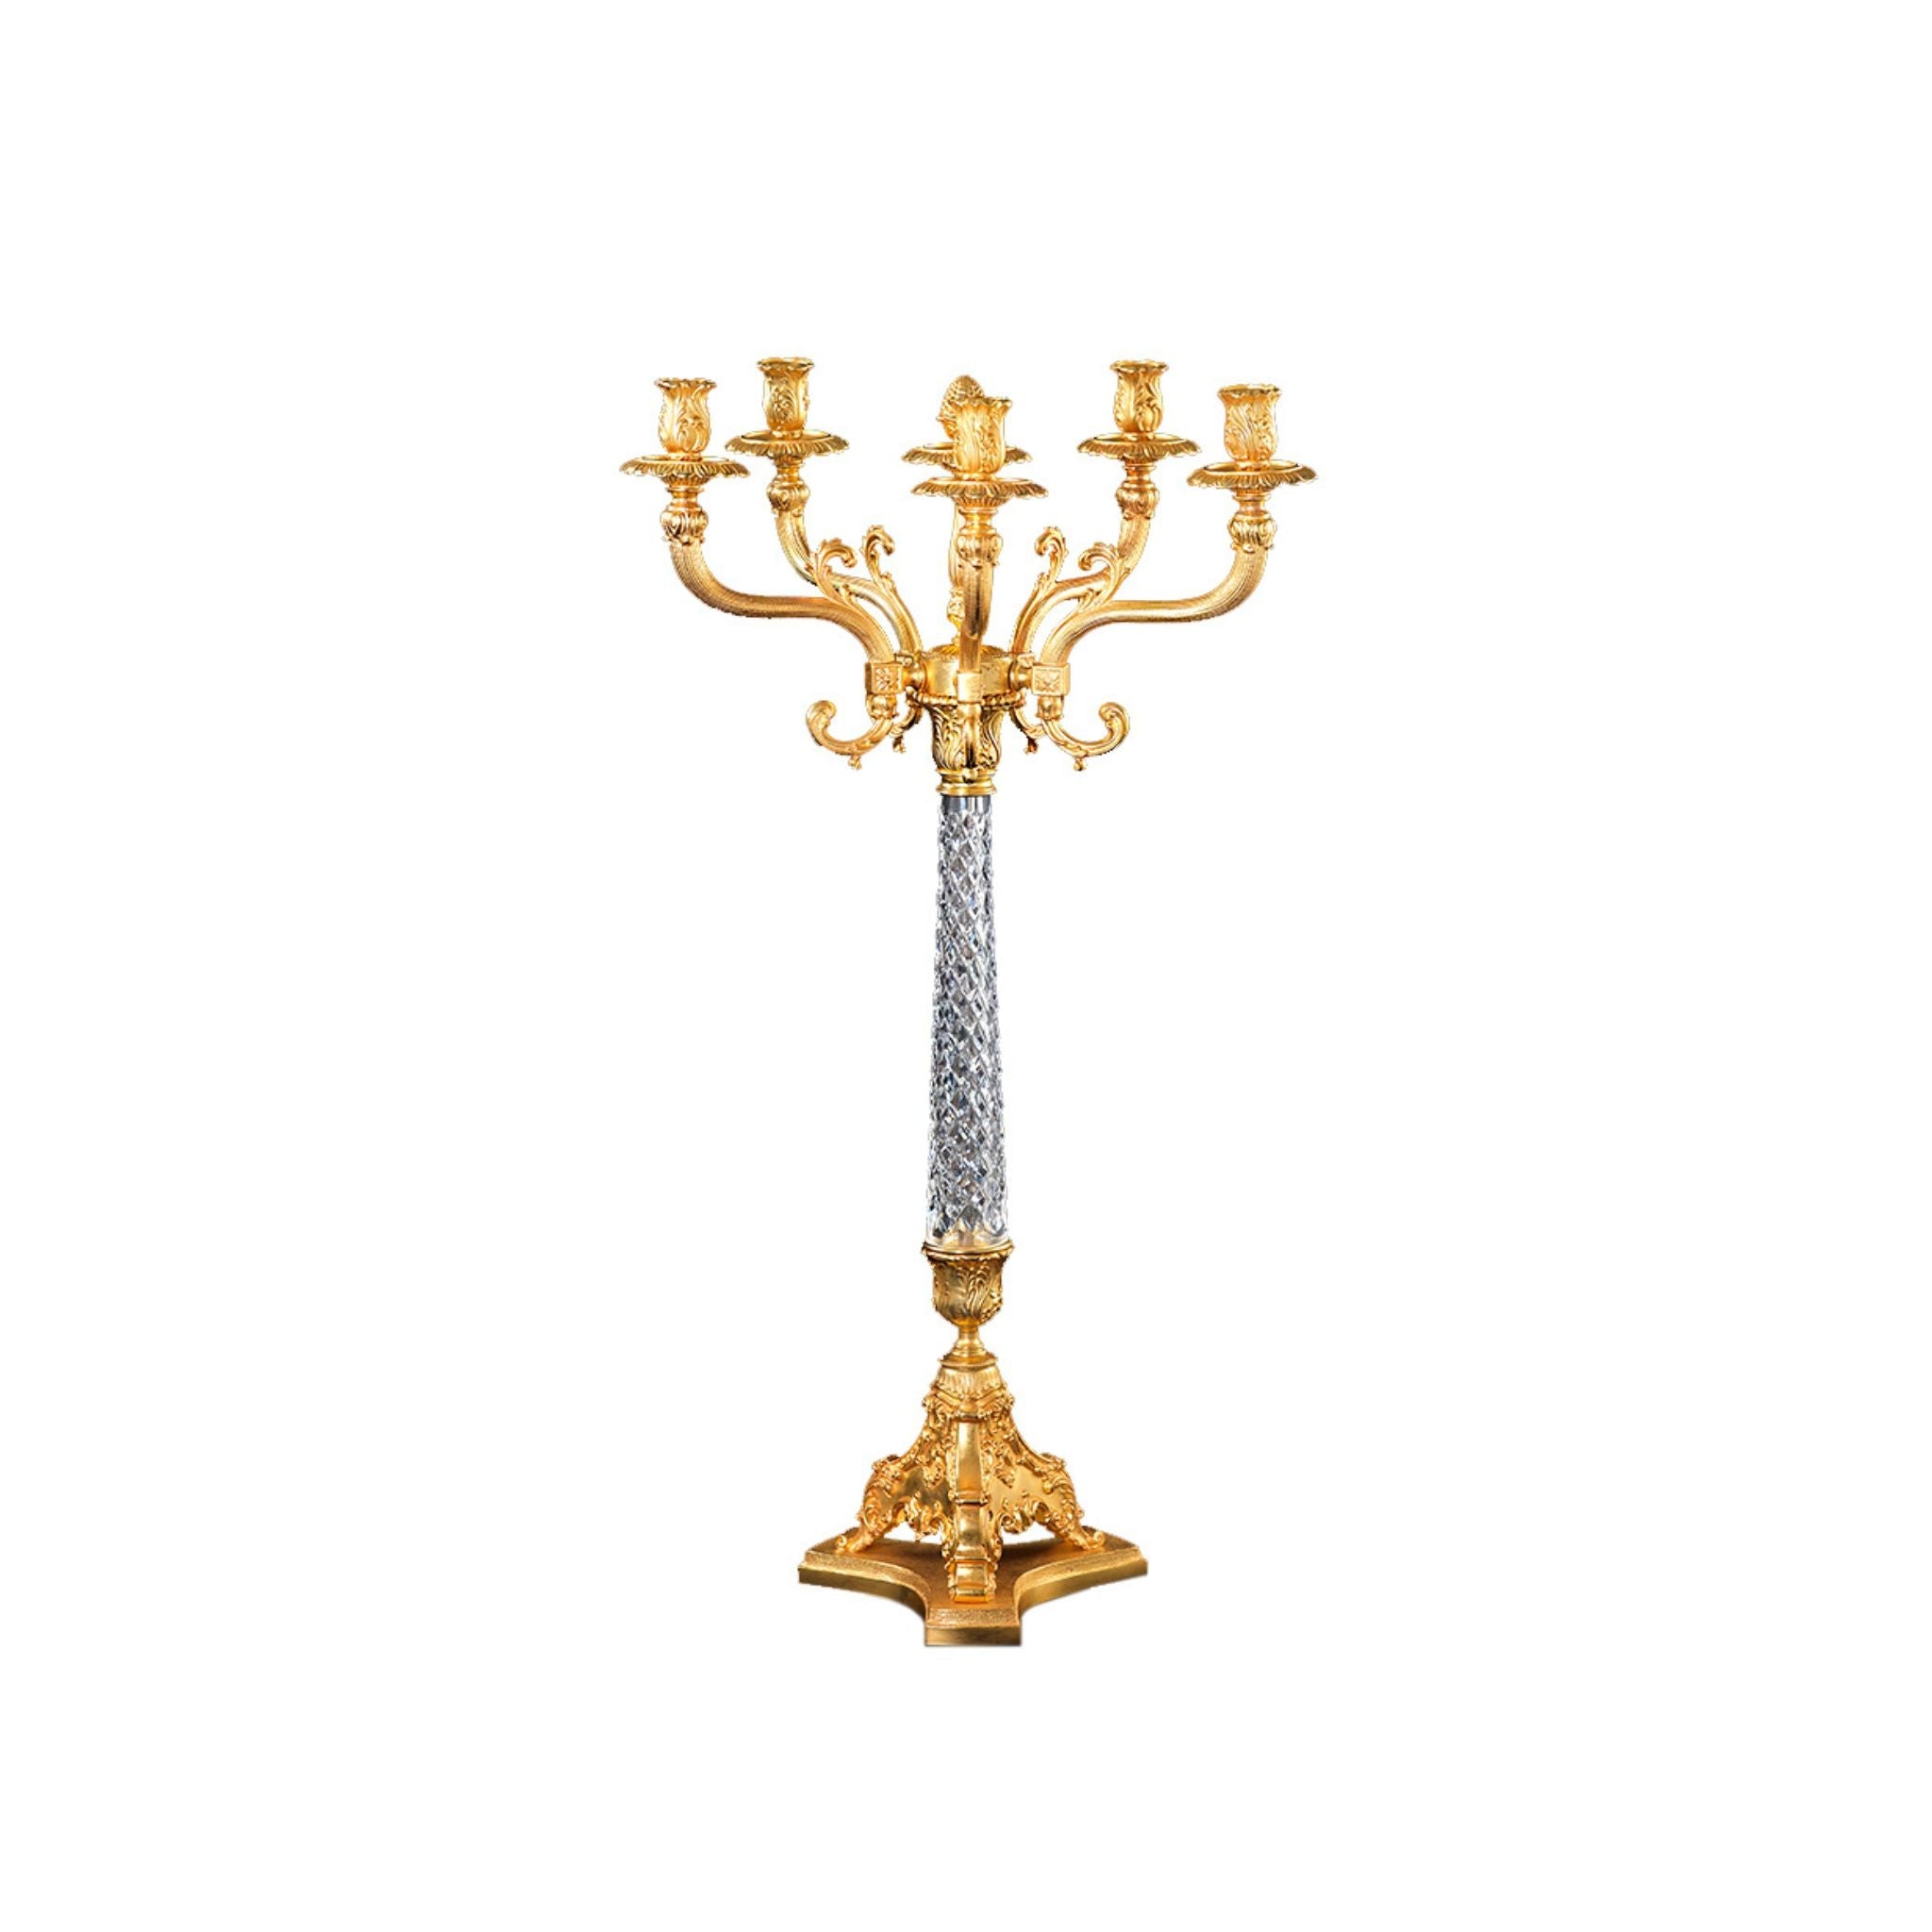 Reggia candelabra crystal steam with six lights - ilbronzetto